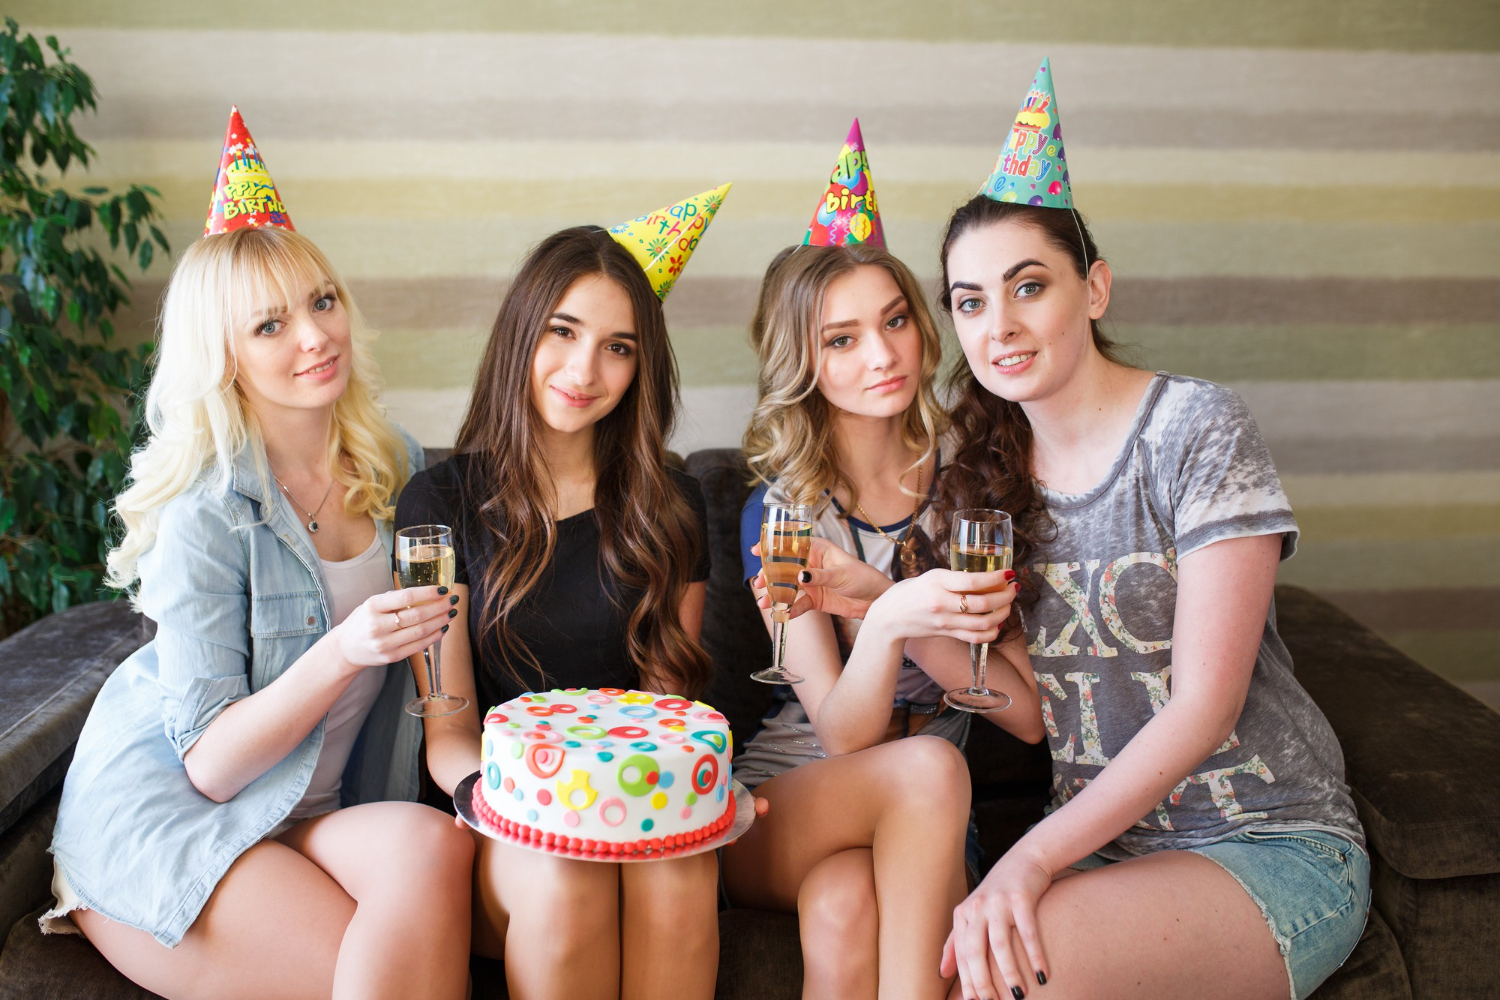 Teenagers celebrating a birthday